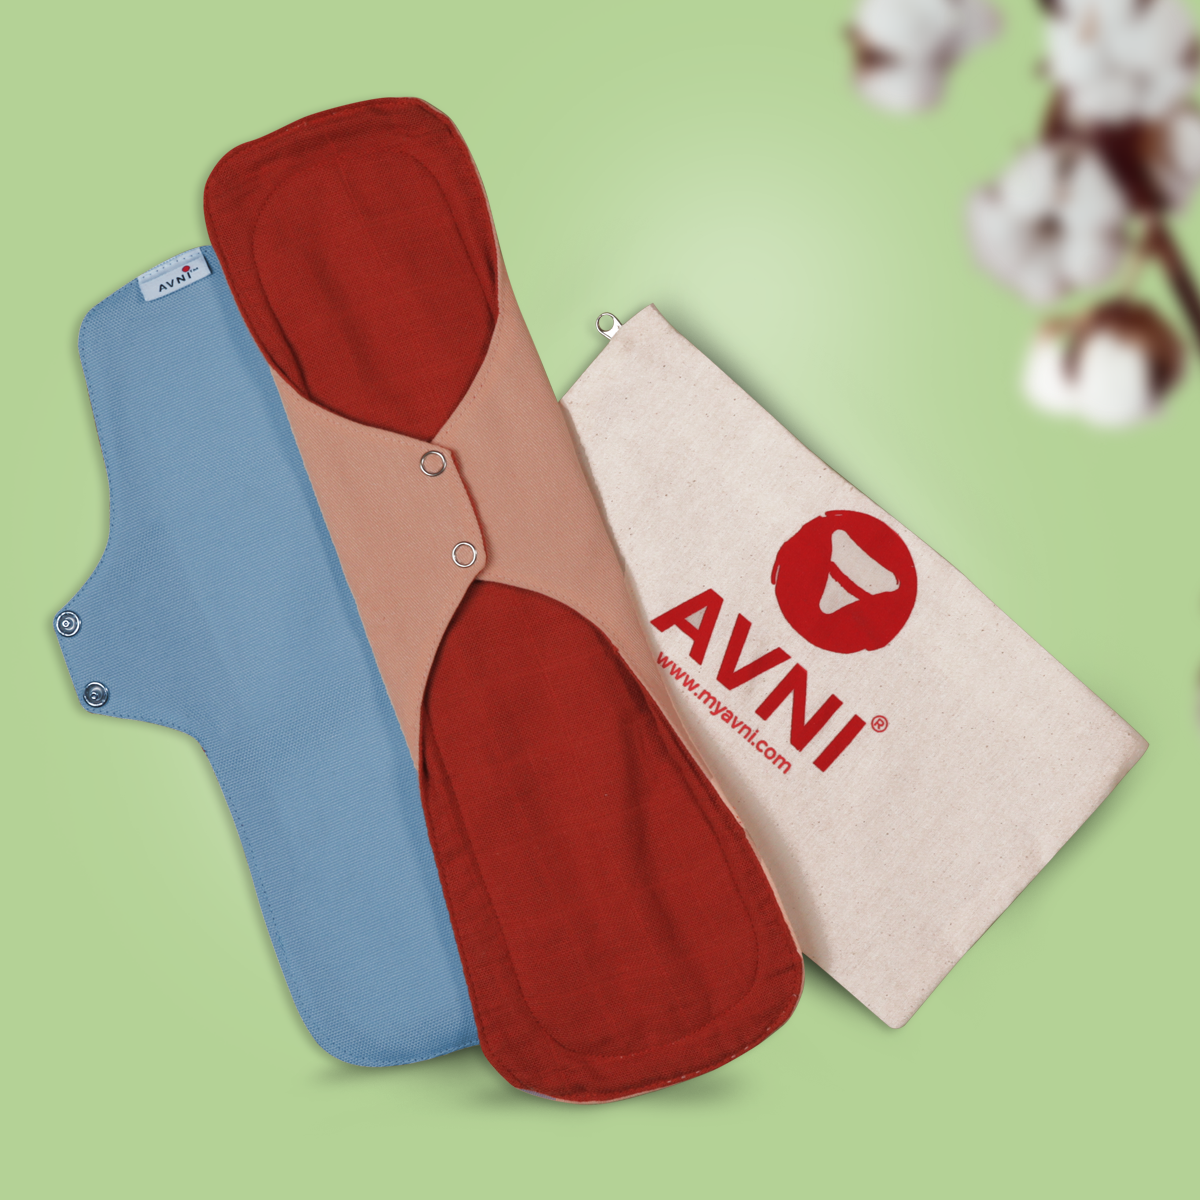 Avni Lush - Antimicrobial 100% Organic Cotton Reusable Cloth Pad